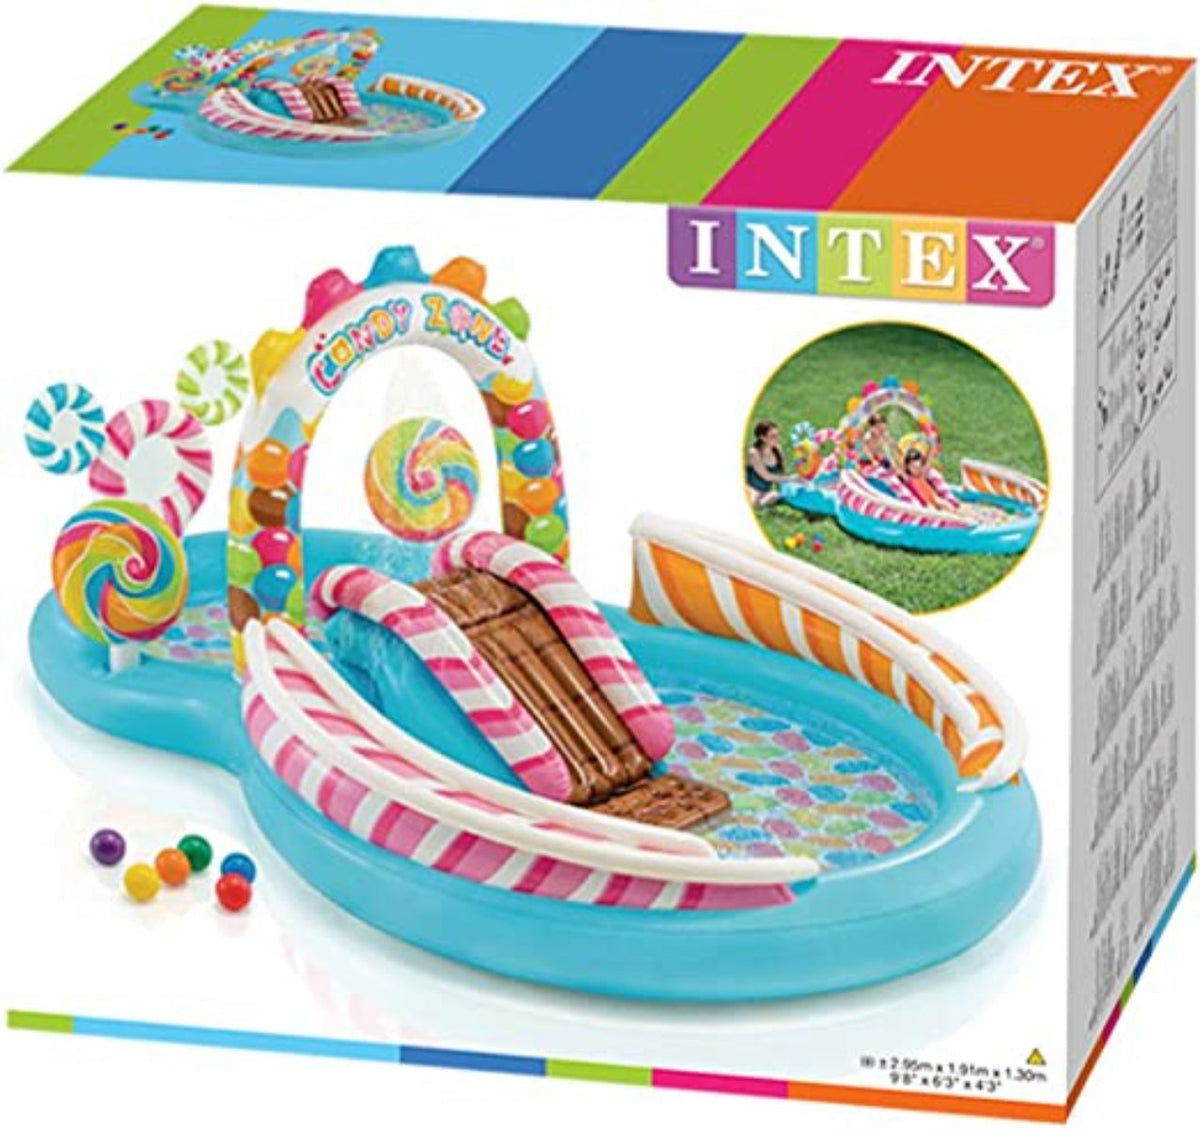 Intex Candy Zone Play Center 206lt